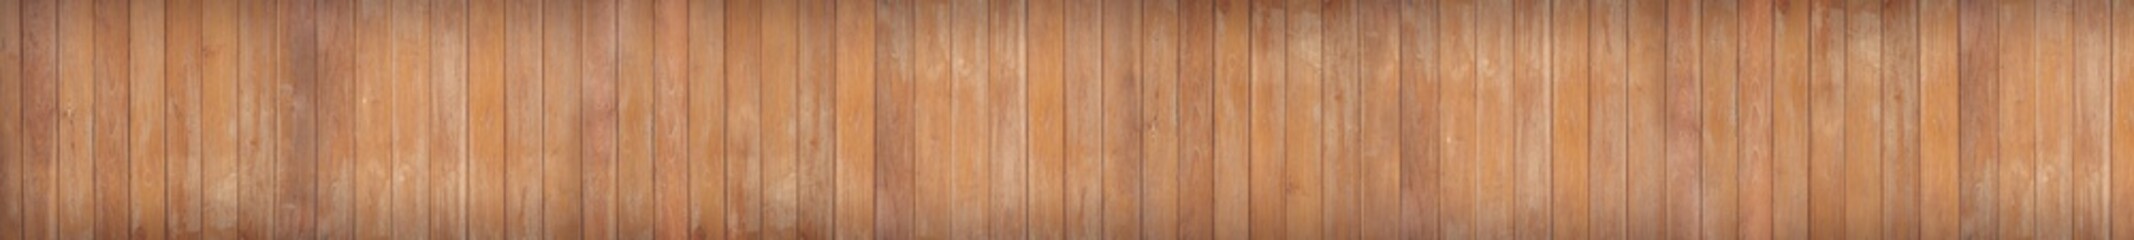 Wood Narrow Boards Backgound